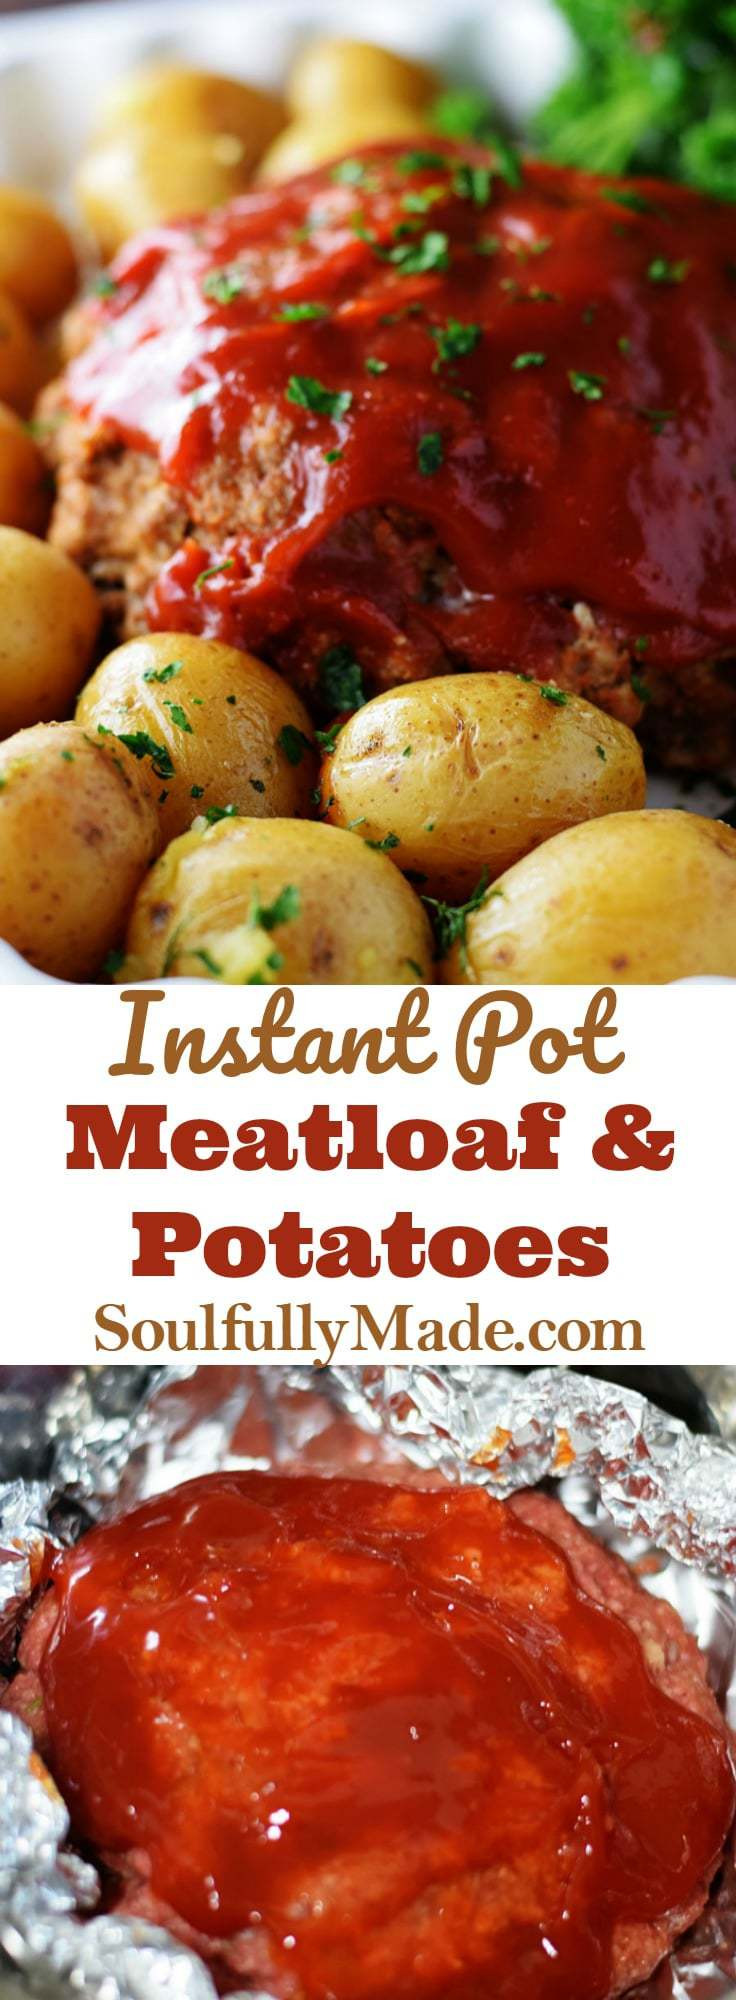 Instant Pot Meatloaf And Potatoes
 Instant Pot Meatloaf and Potatoes